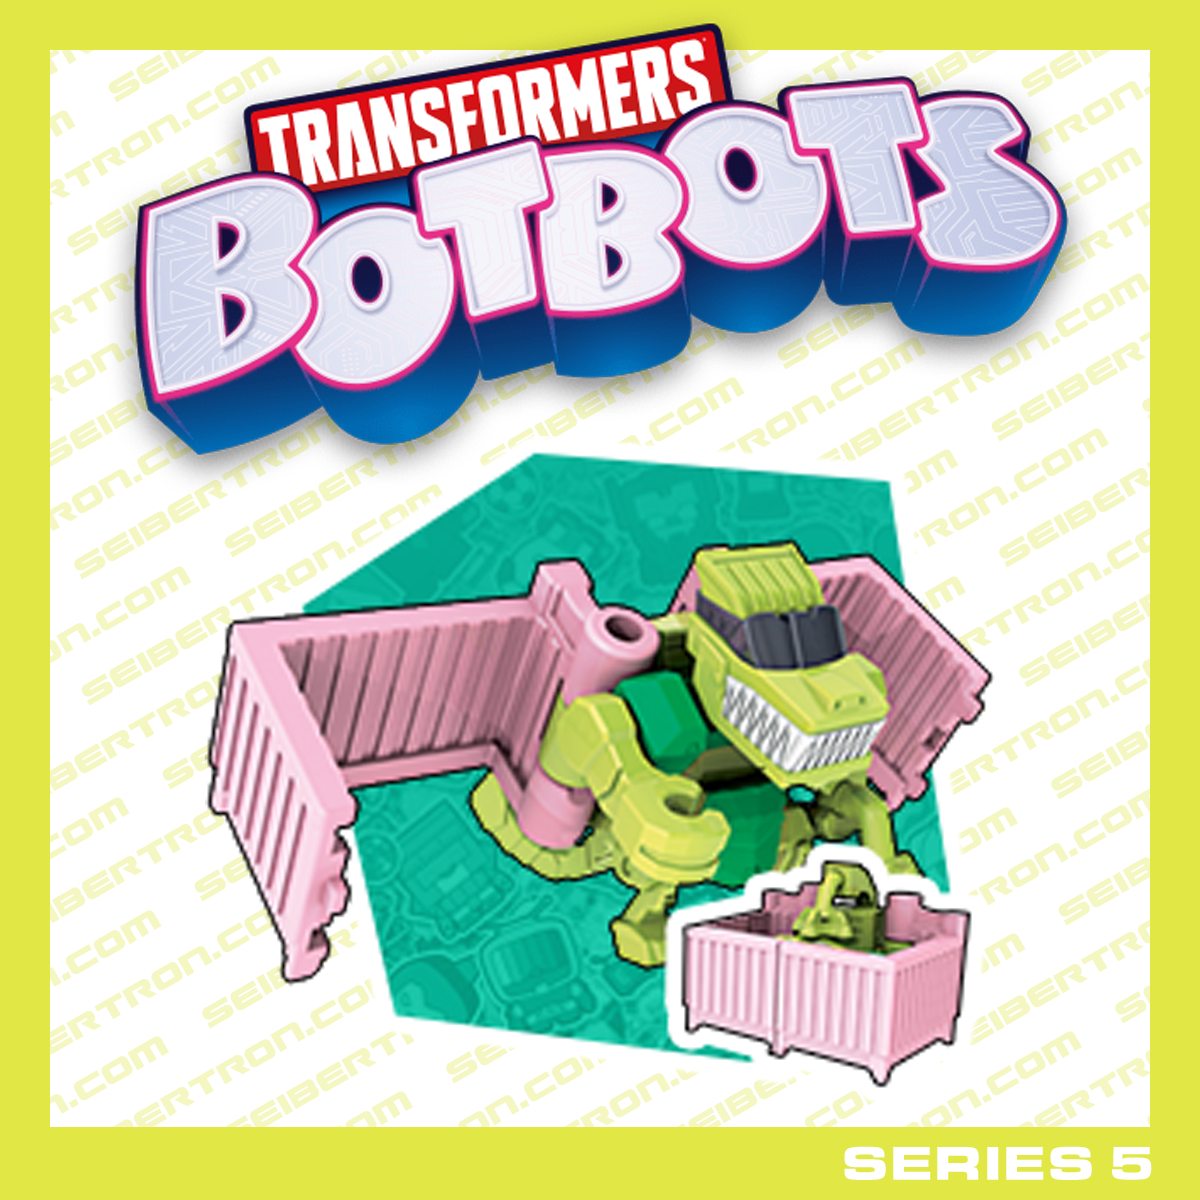 REPTILIN SLEEPSTYLIN Transformers BotBots Series 5 Home Rangers baby crib 2020